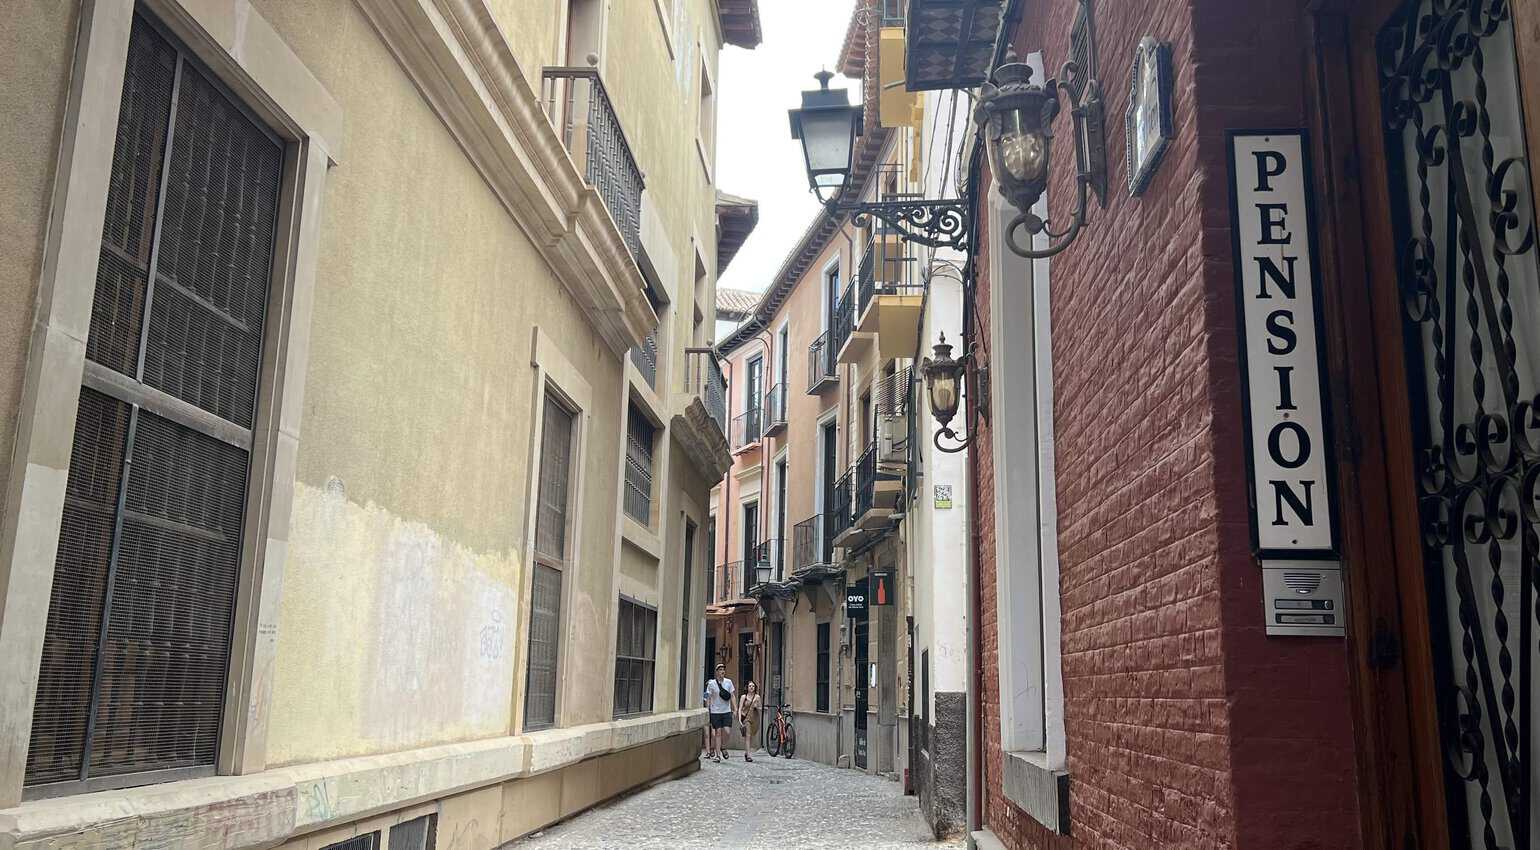 Garcia Lorca most likely walked this very street in the San Matias Realejo neighborhood